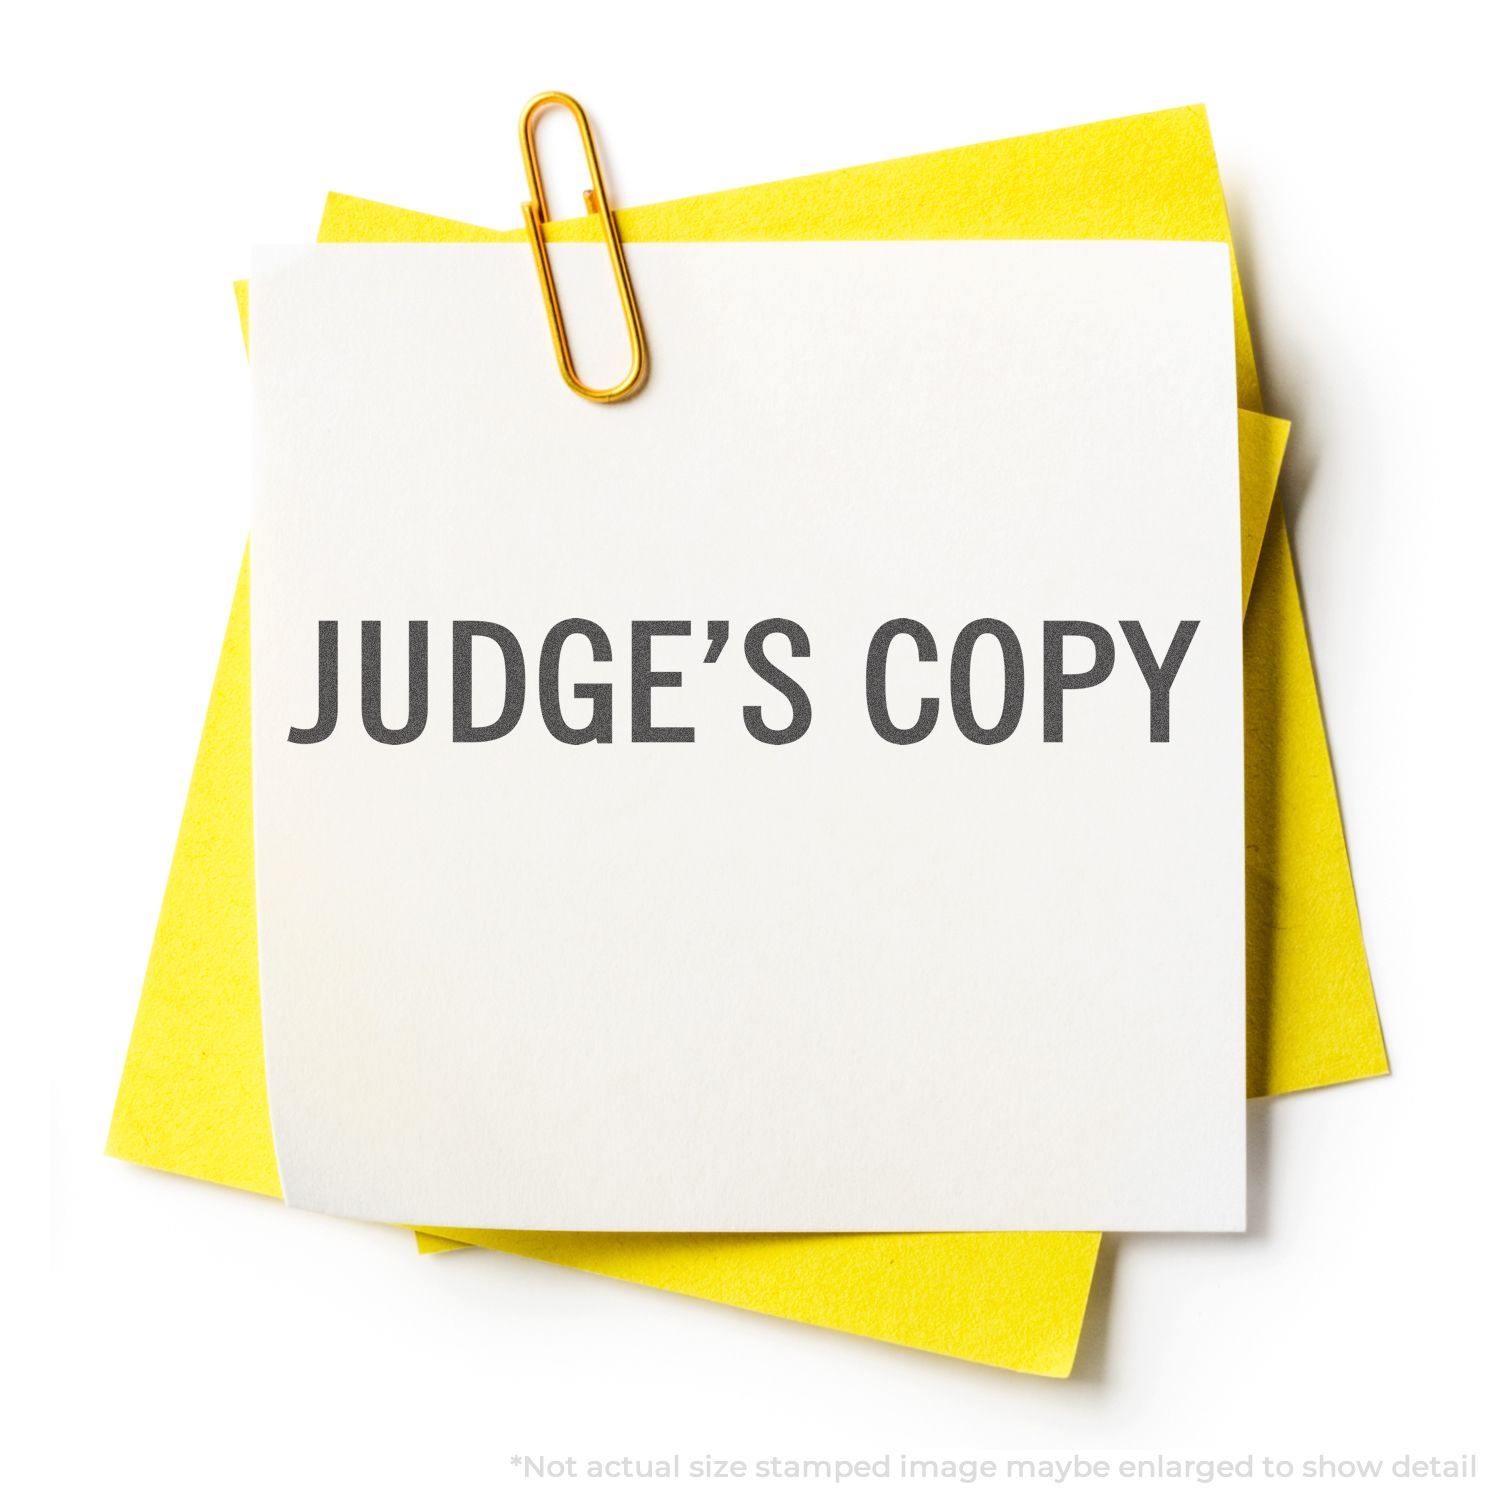 In Use Photo of Judge's Copy Xstamper Stamp